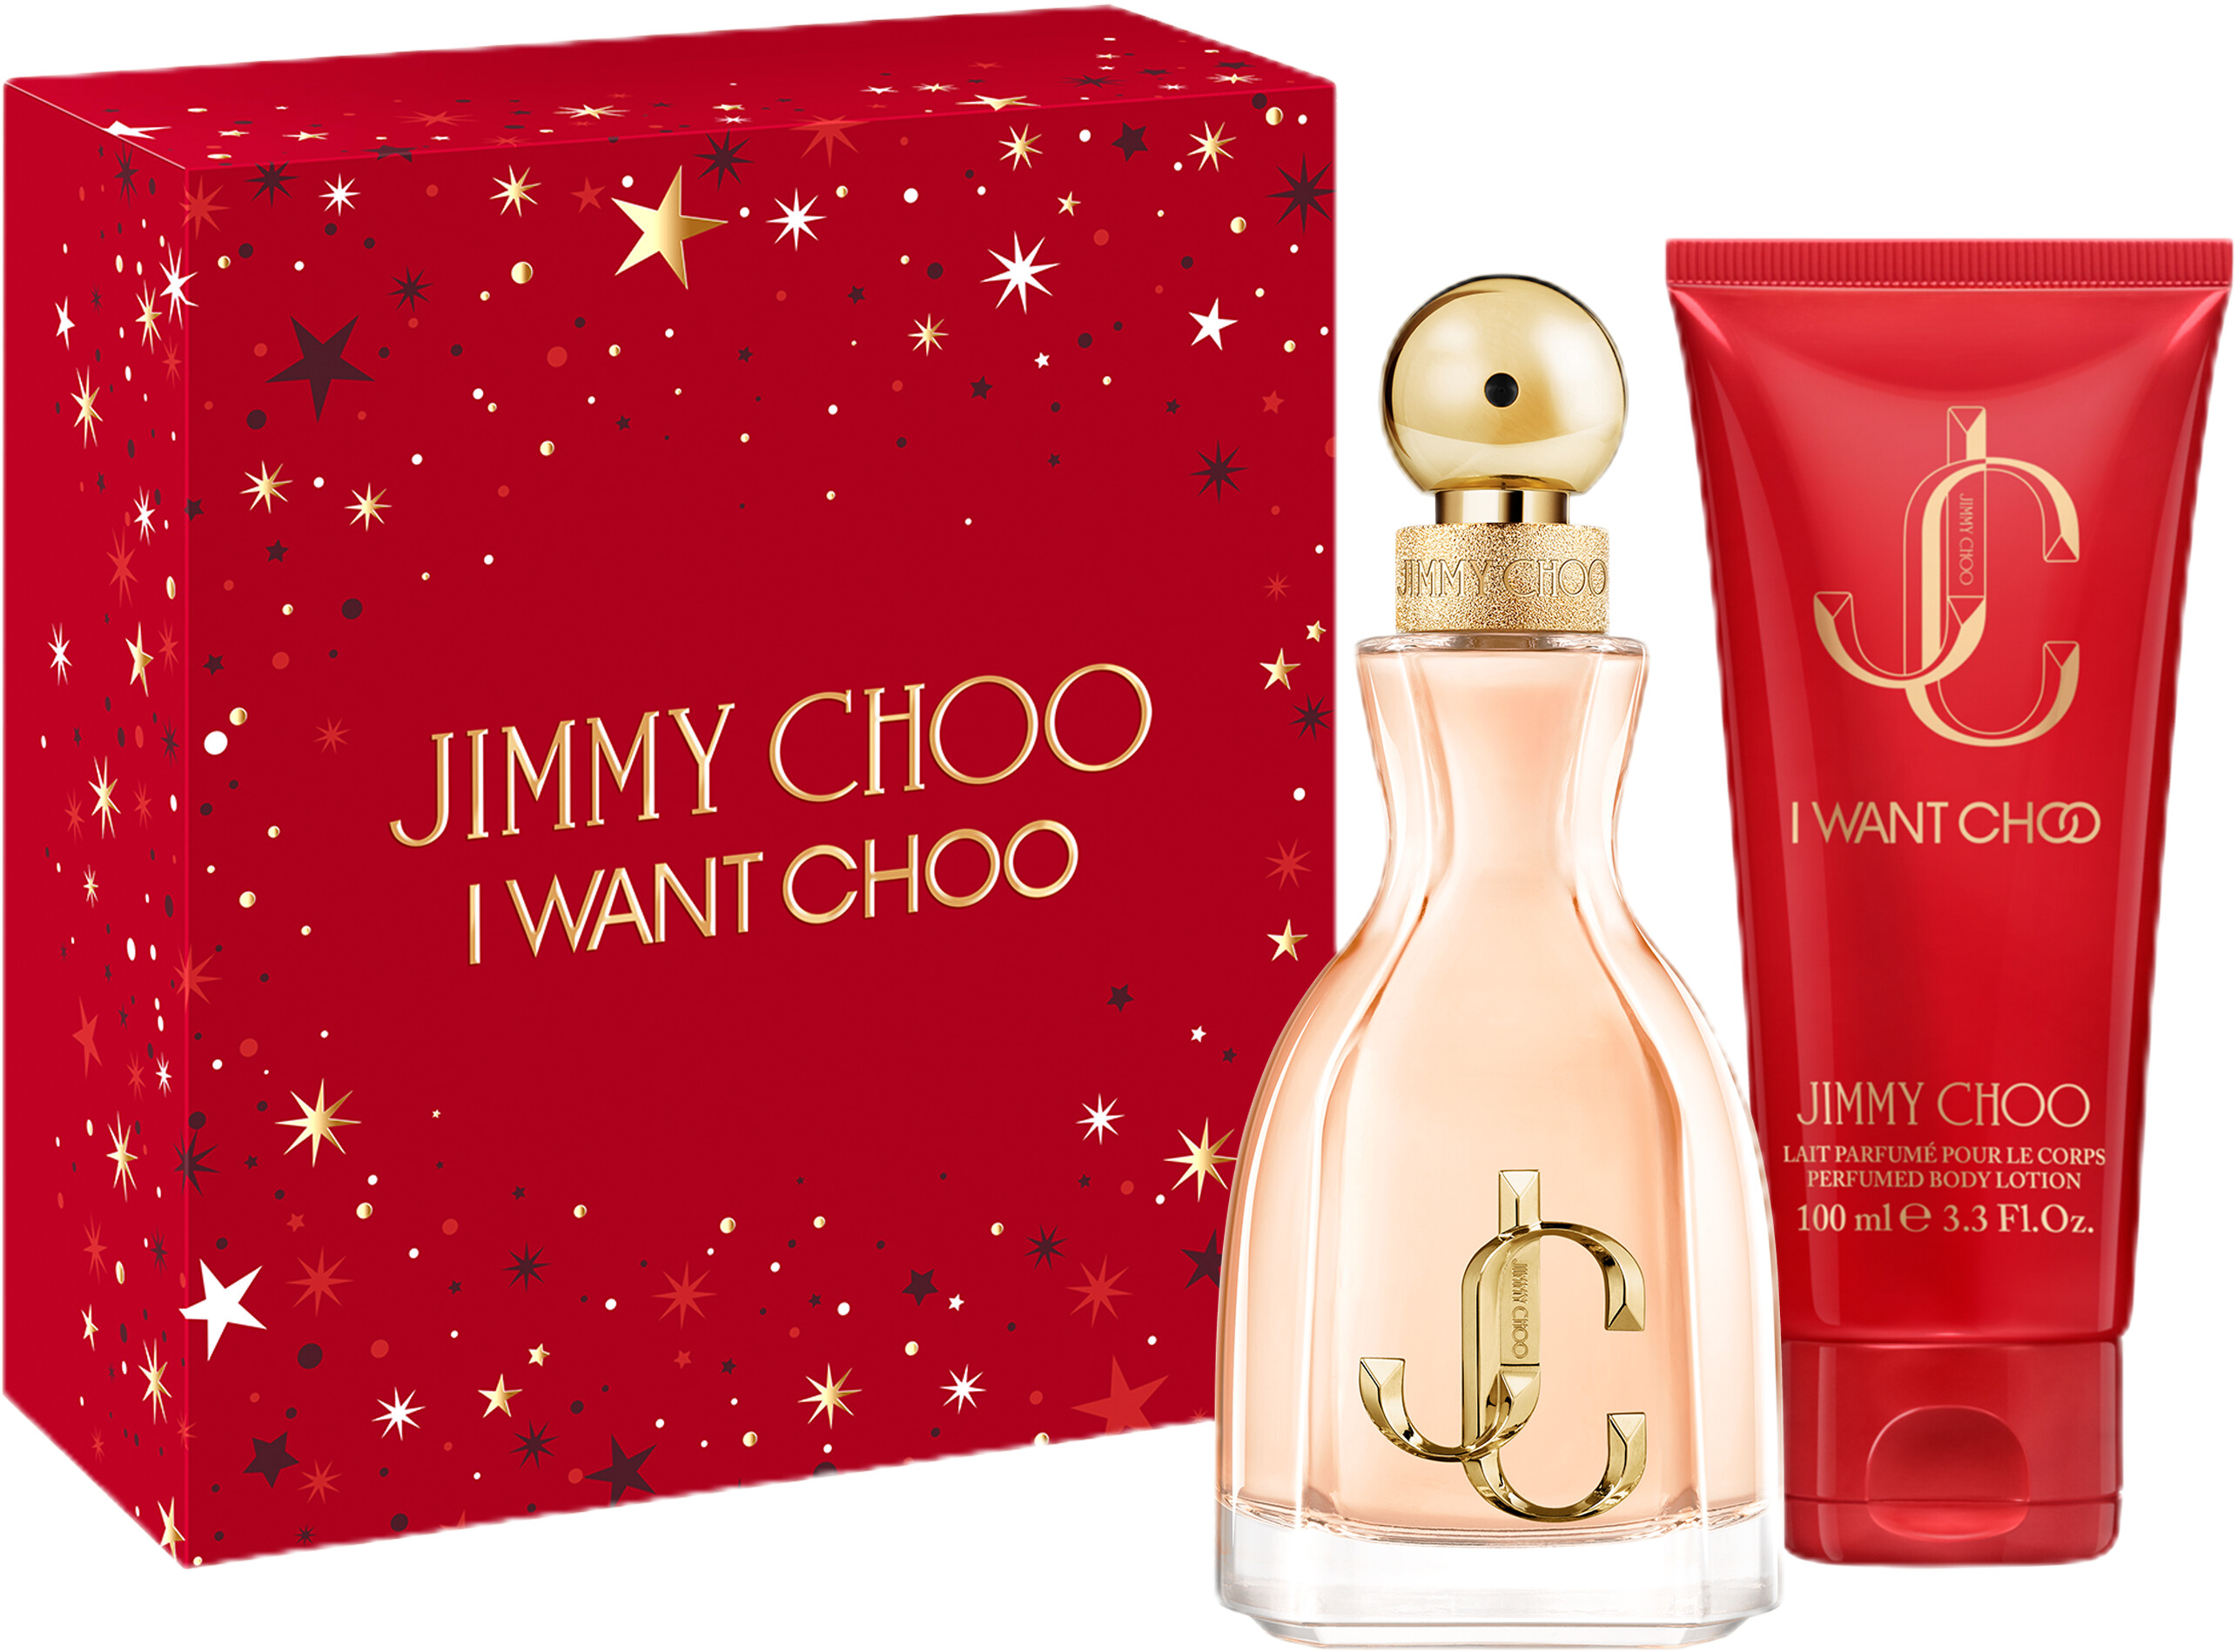 Jimmy Choo I Want Choo Eau de Parfum Spray 60ml Gift Set